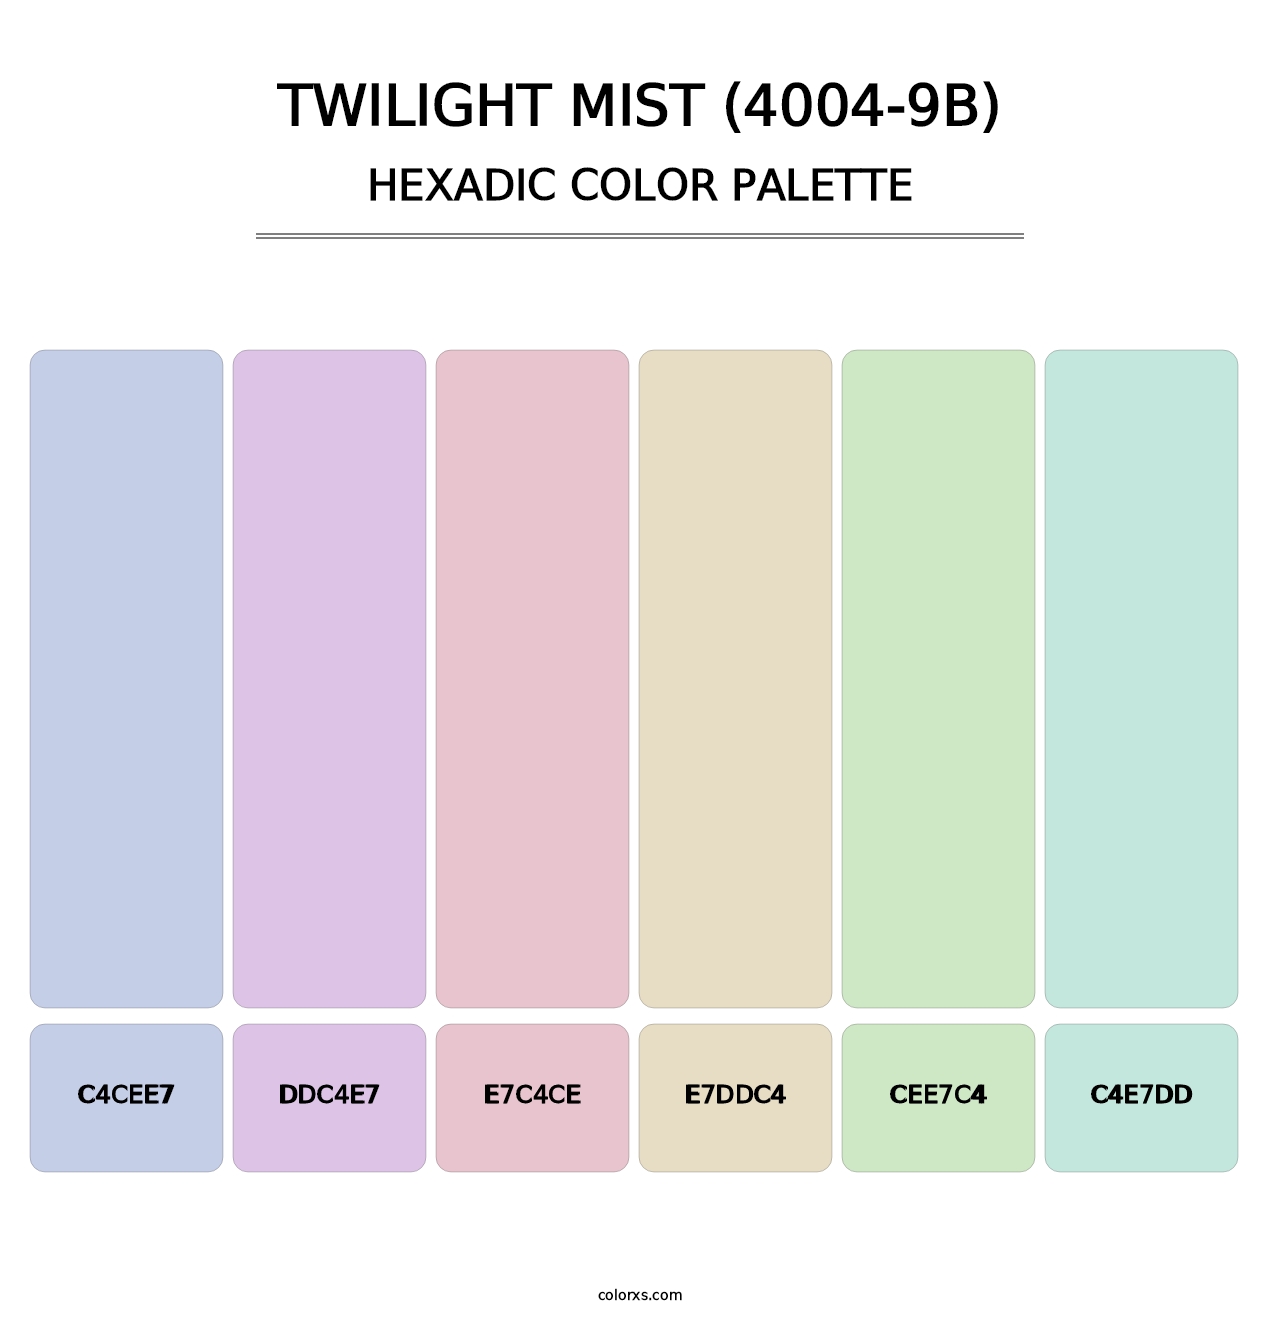 Twilight Mist (4004-9B) - Hexadic Color Palette